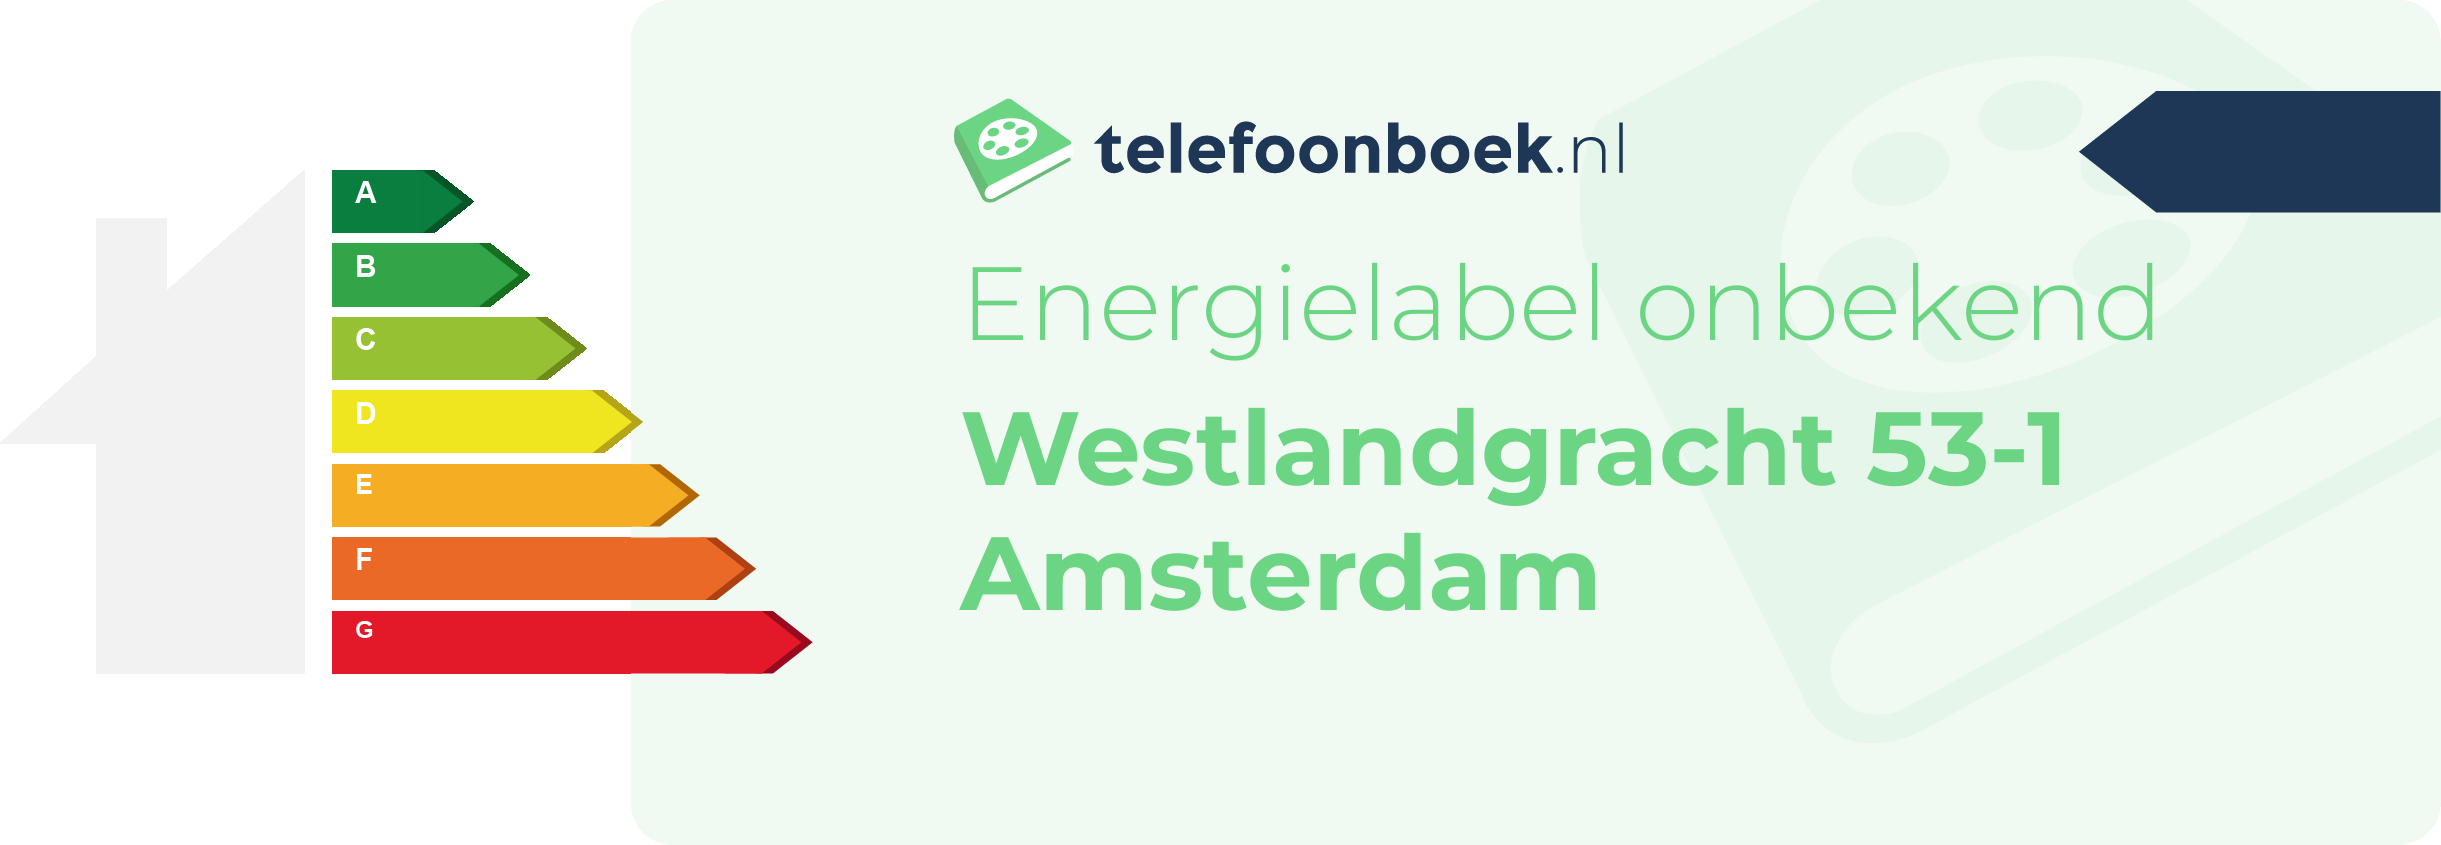 Energielabel Westlandgracht 53-1 Amsterdam